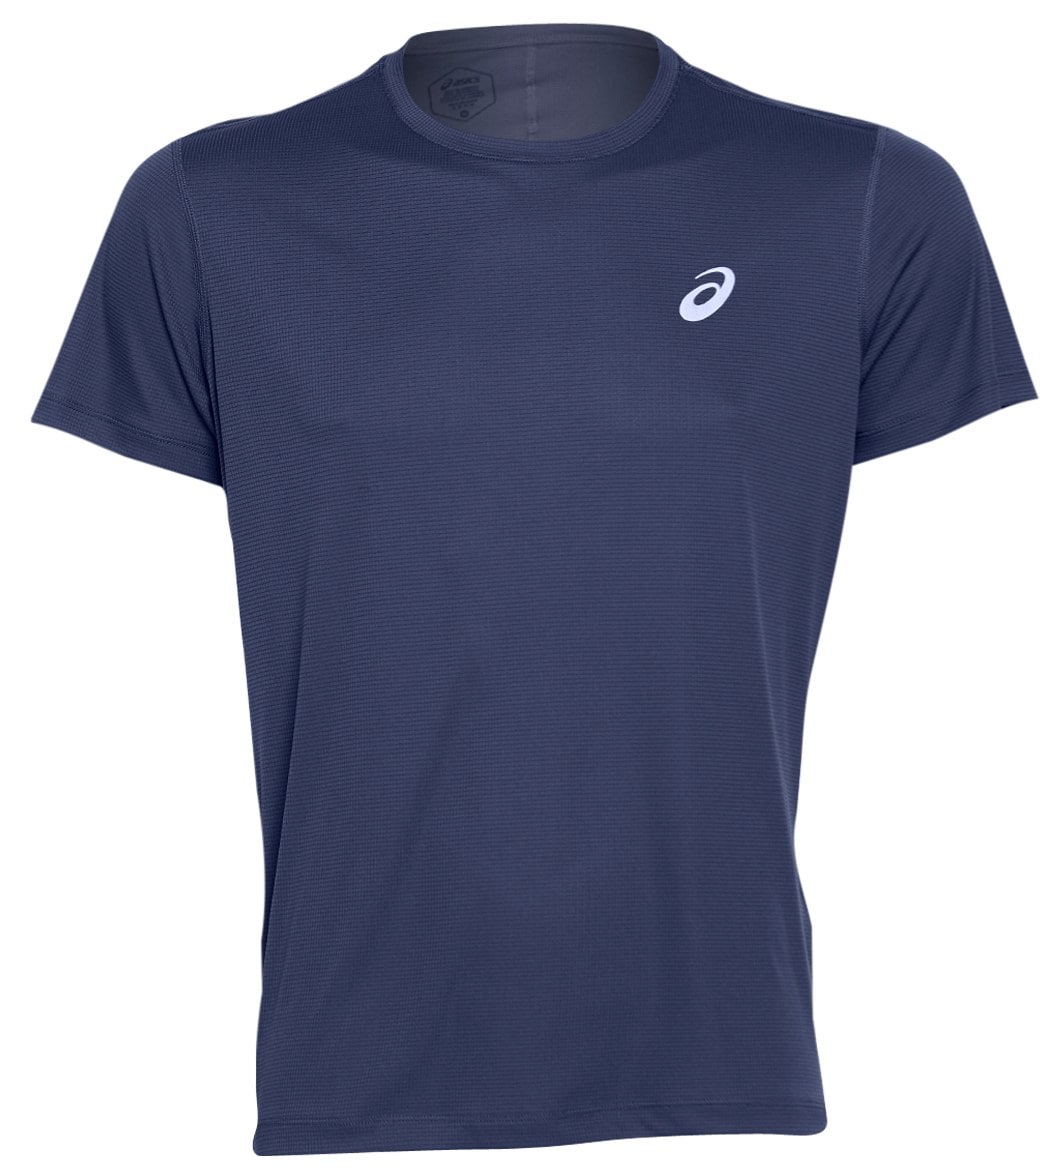 Asics Men's Silver Short Sleeve Top Shirt - Peacoat Xl Size Xl Polyester - Swimoutlet.com